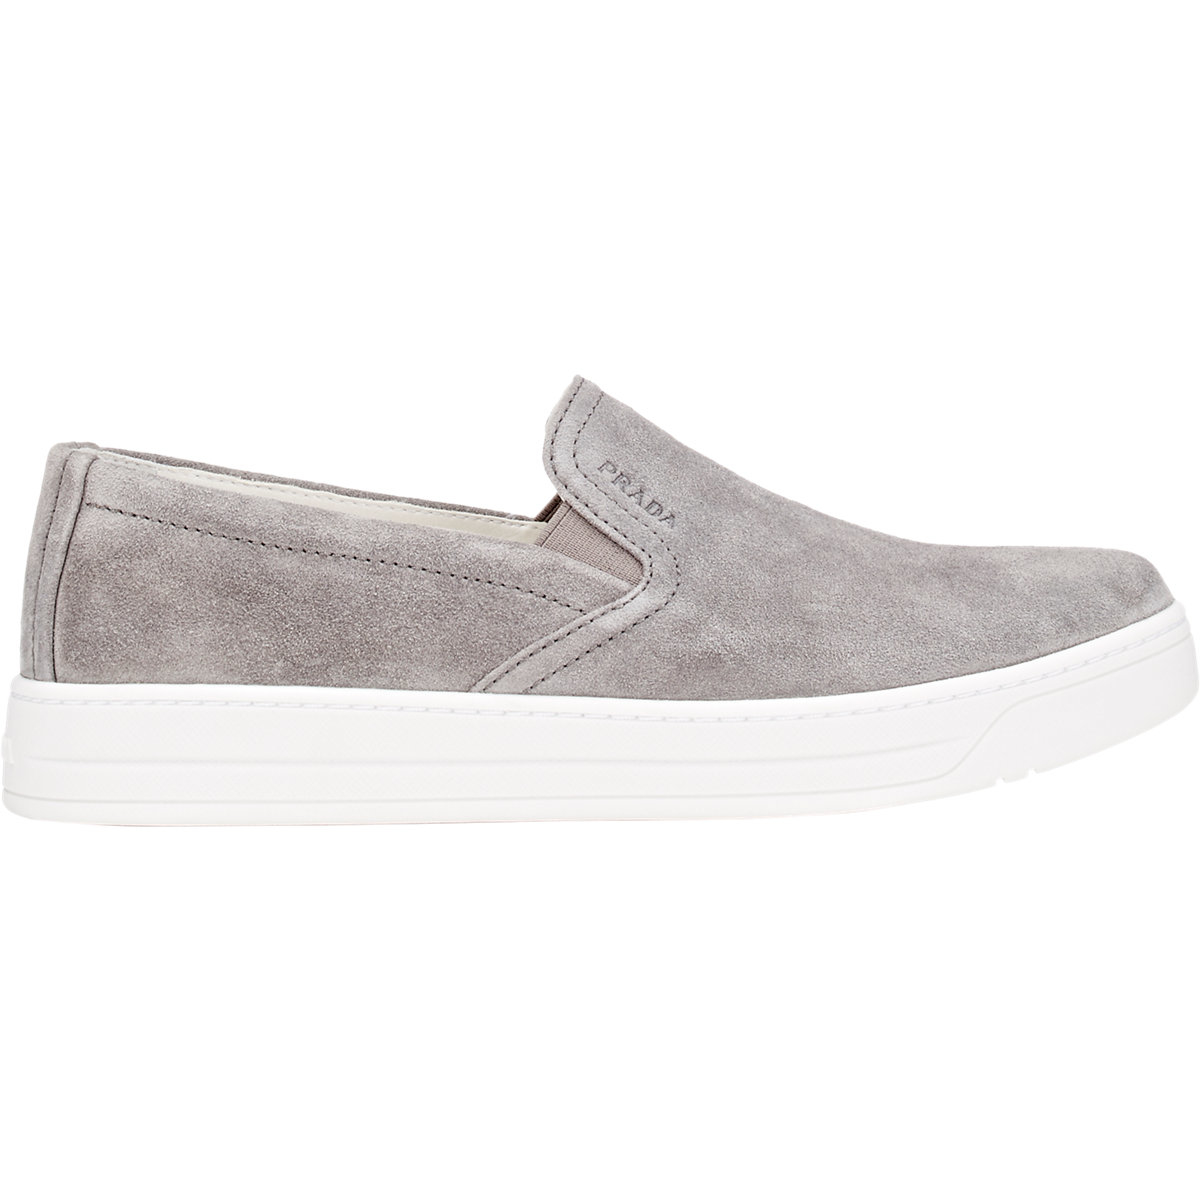 Lyst - Prada Women's Slip-on Sneakers in Gray